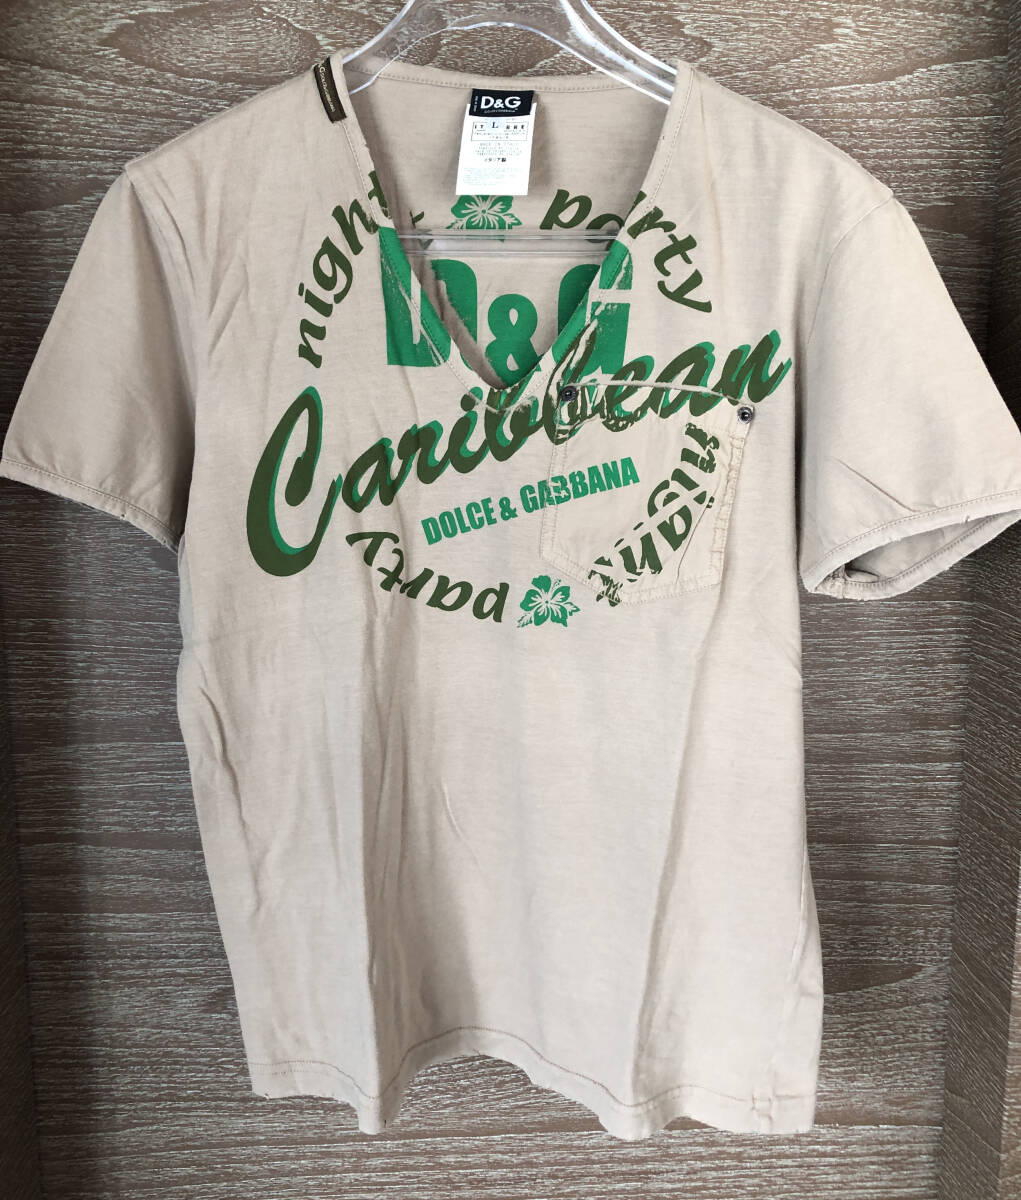 D&G ドルチェ&ガッバーナ DOLCE&GABBANA メンズ Tシャツ Vネック Lサイズ_画像1